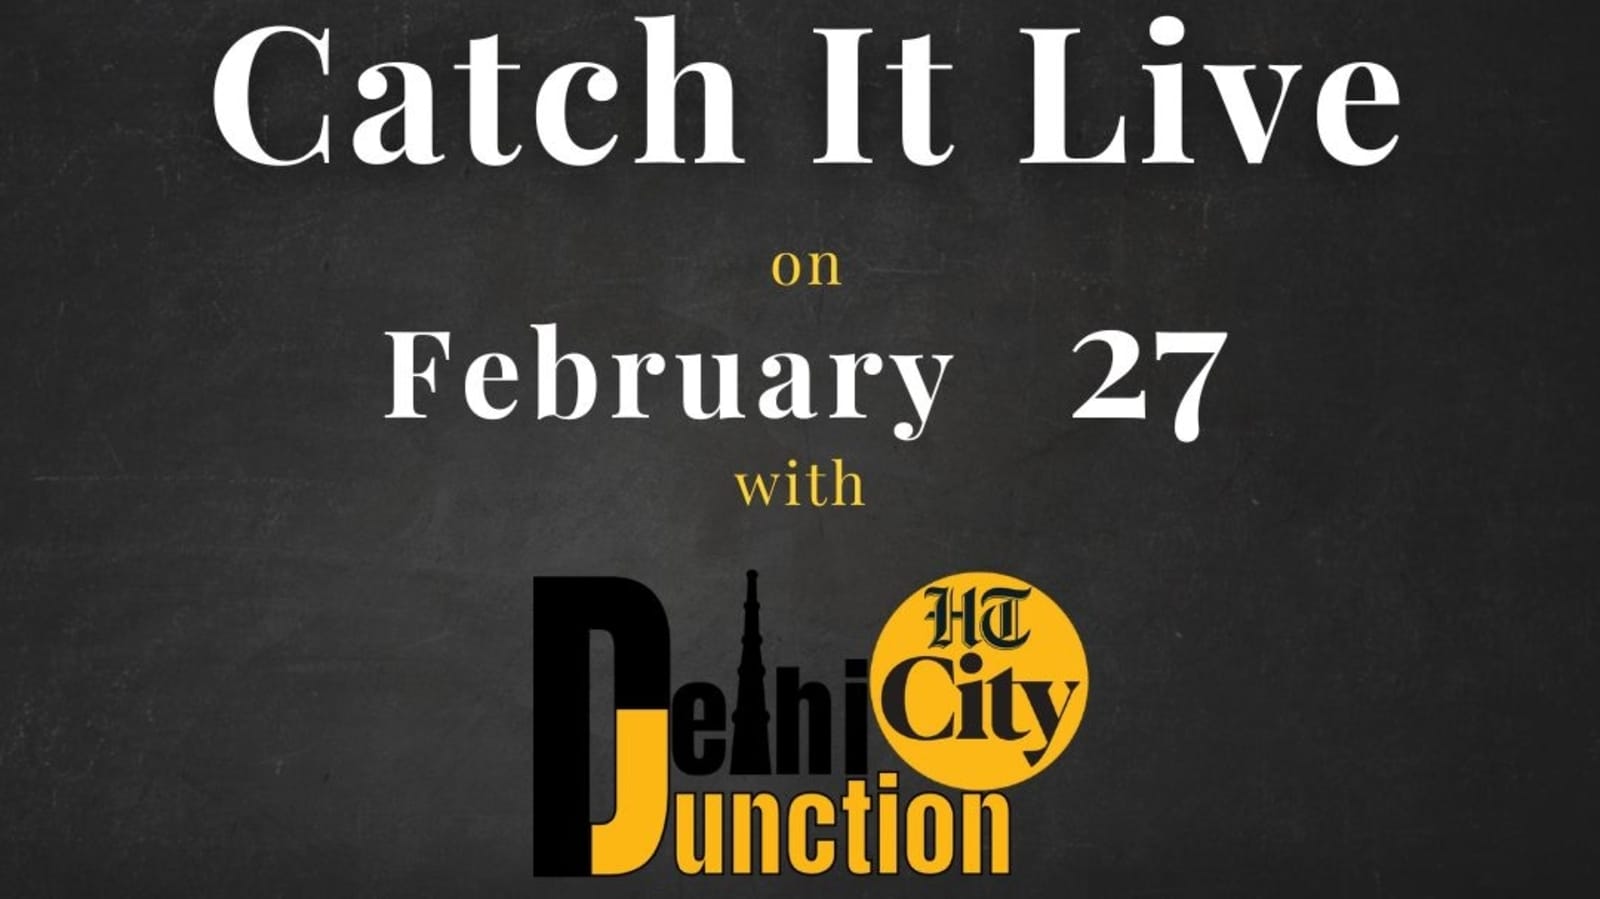 HT City Delhi Junction: Catch It Live on February 27